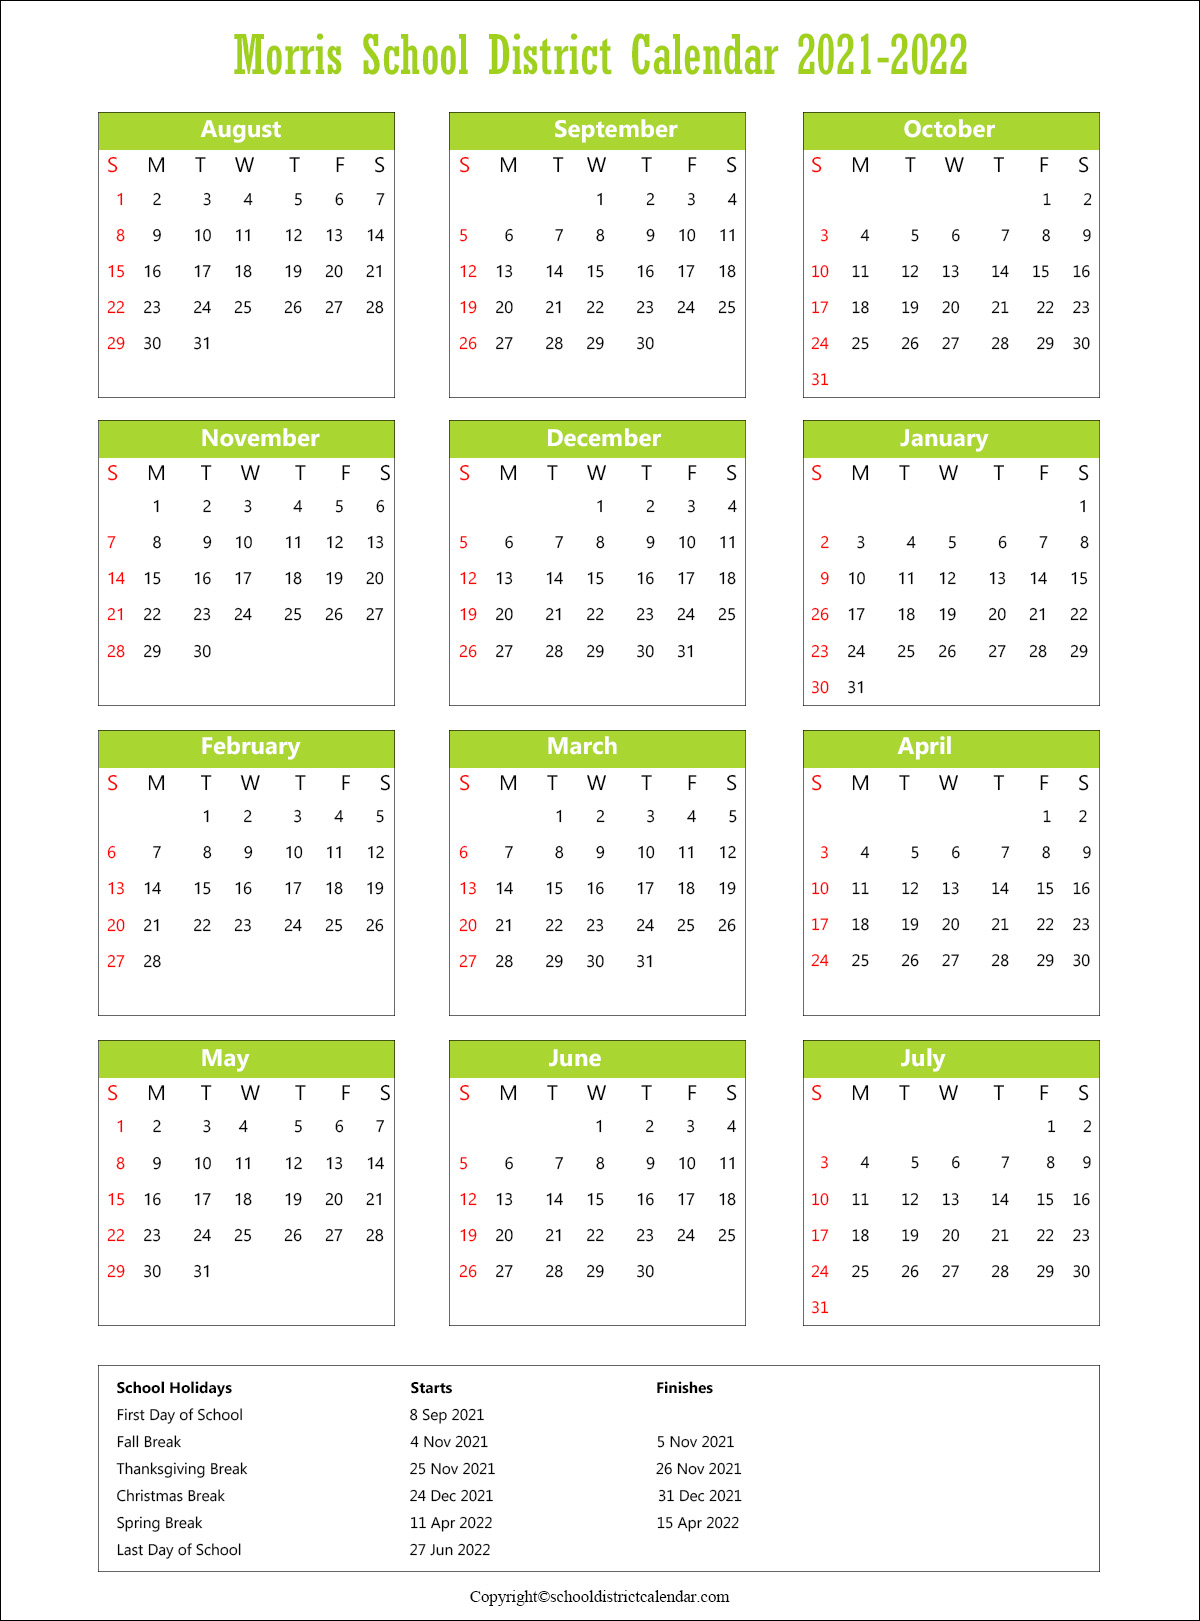 Morris School District, New Jersey Calendar Holidays 2021